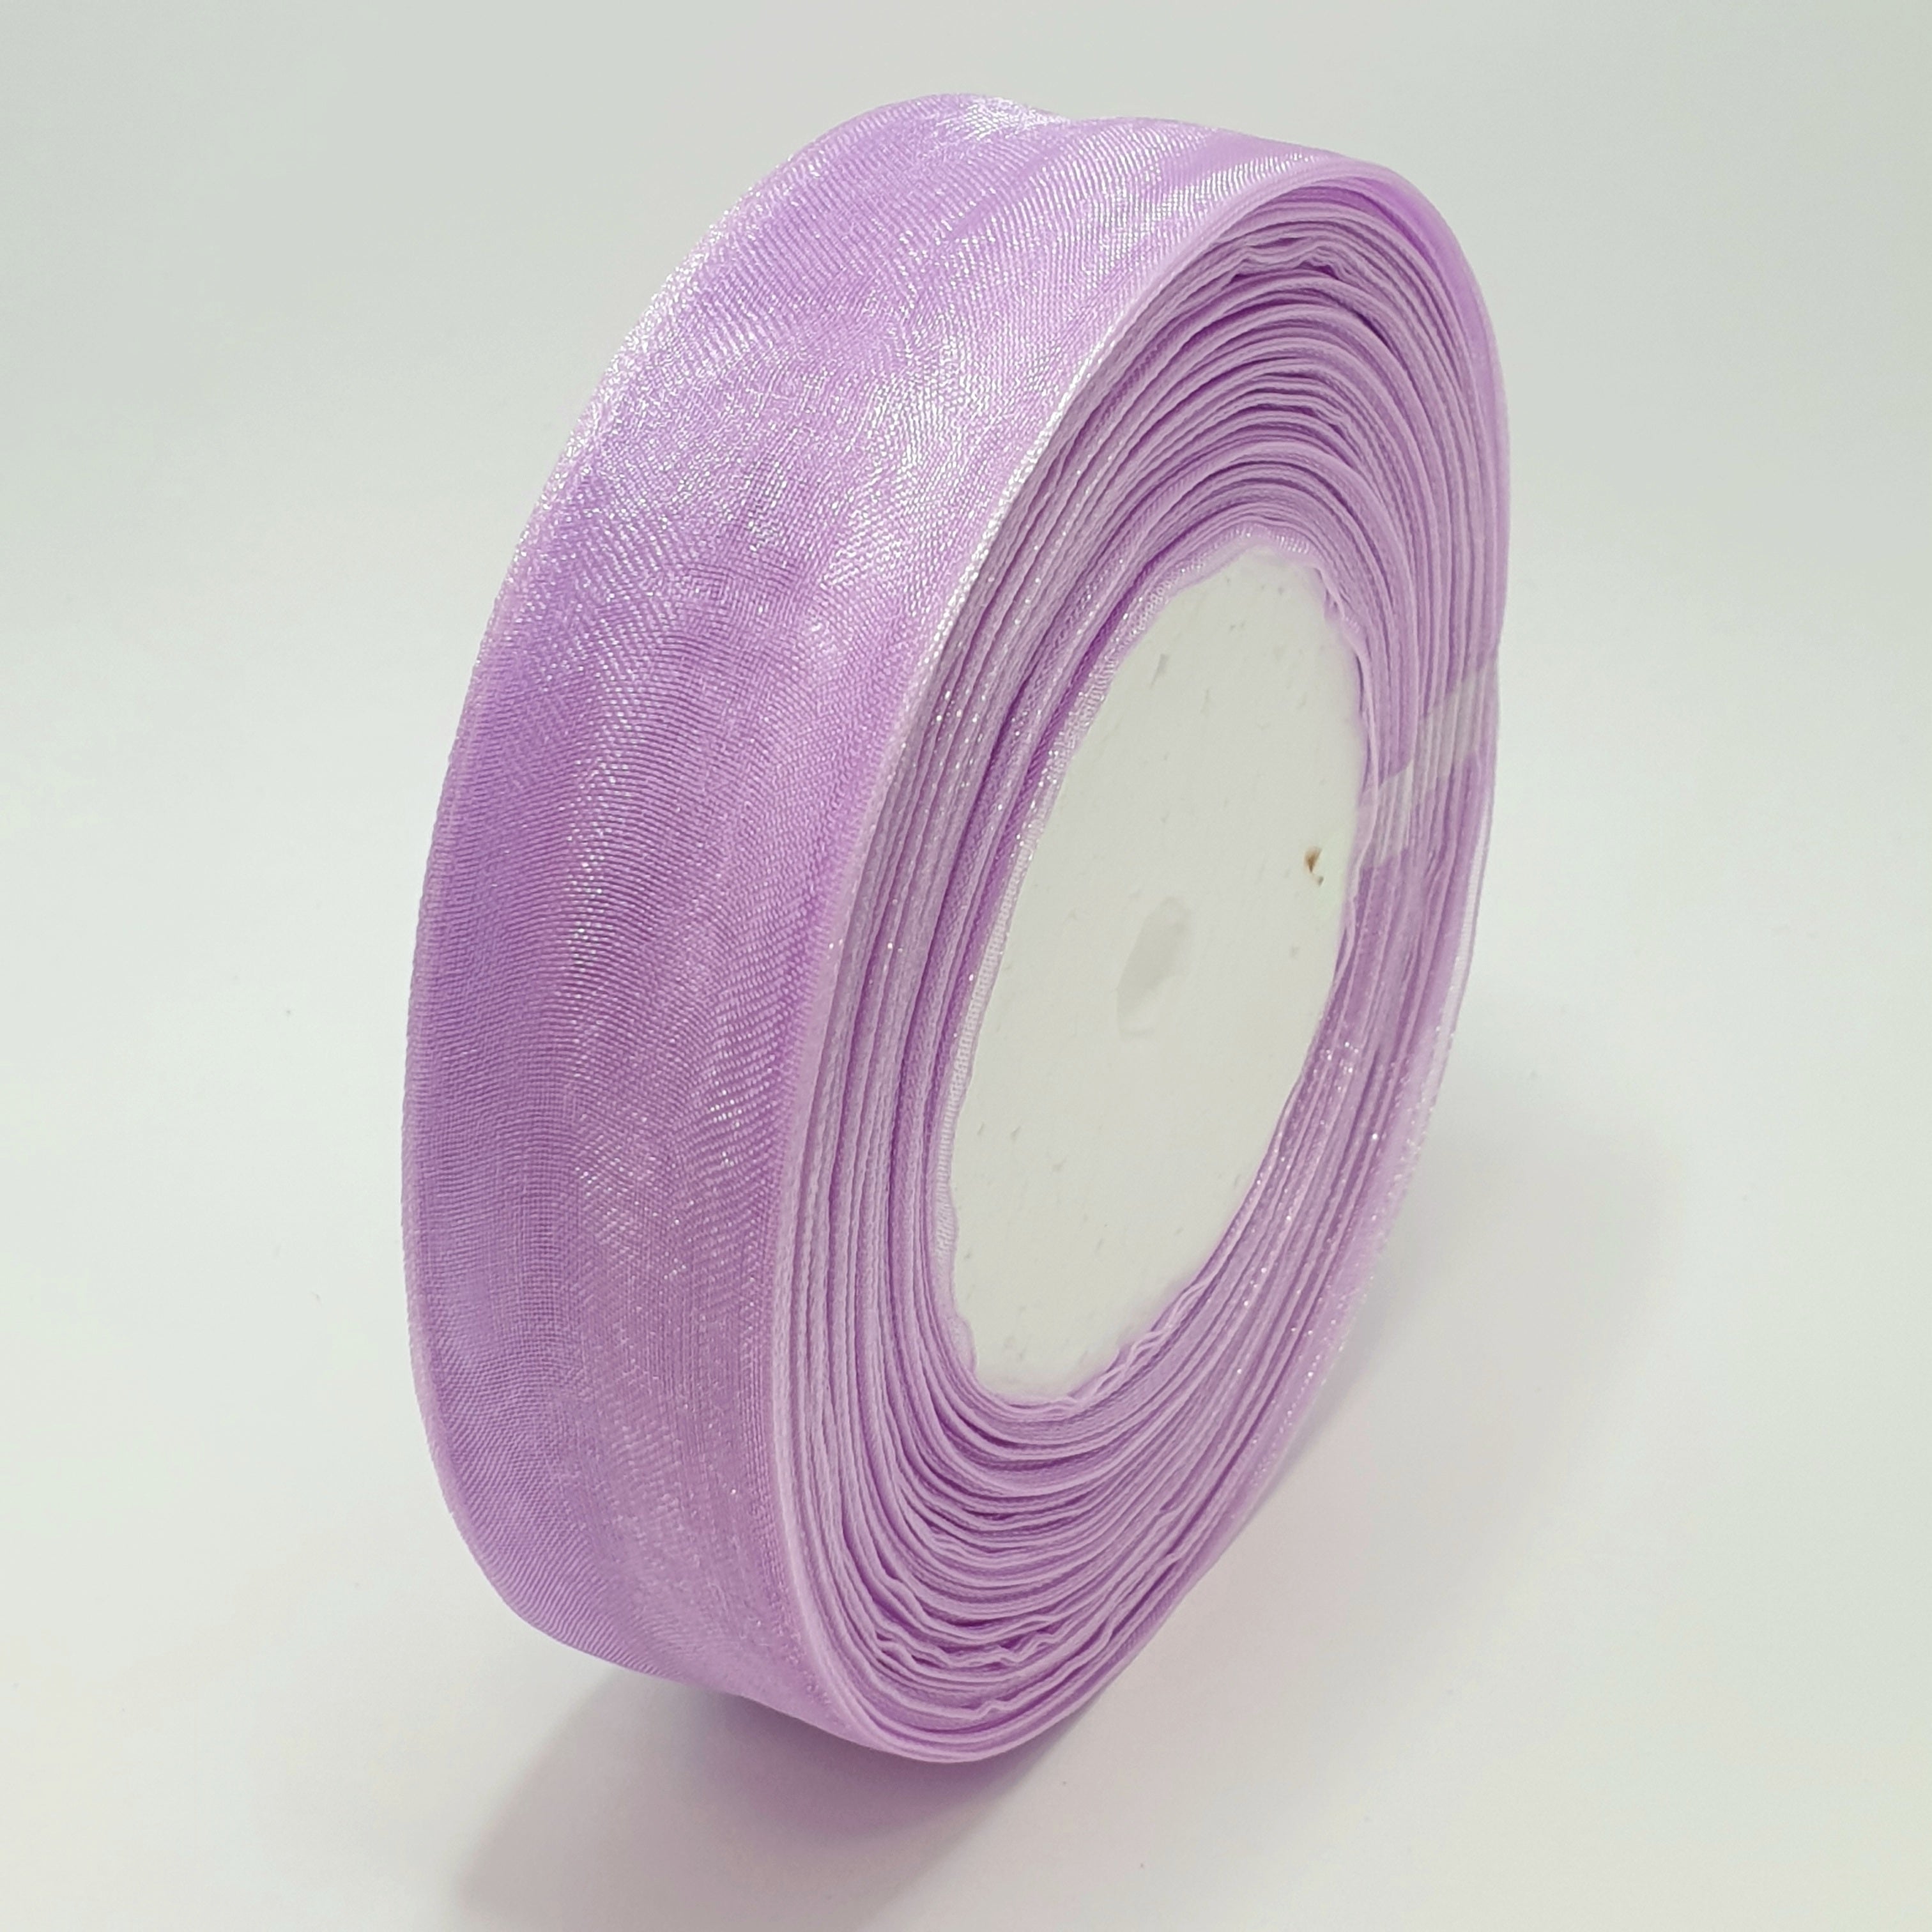 MajorCrafts 25mm 45metres Sheer Organza Fabric Ribbon Roll Light Purple BK42